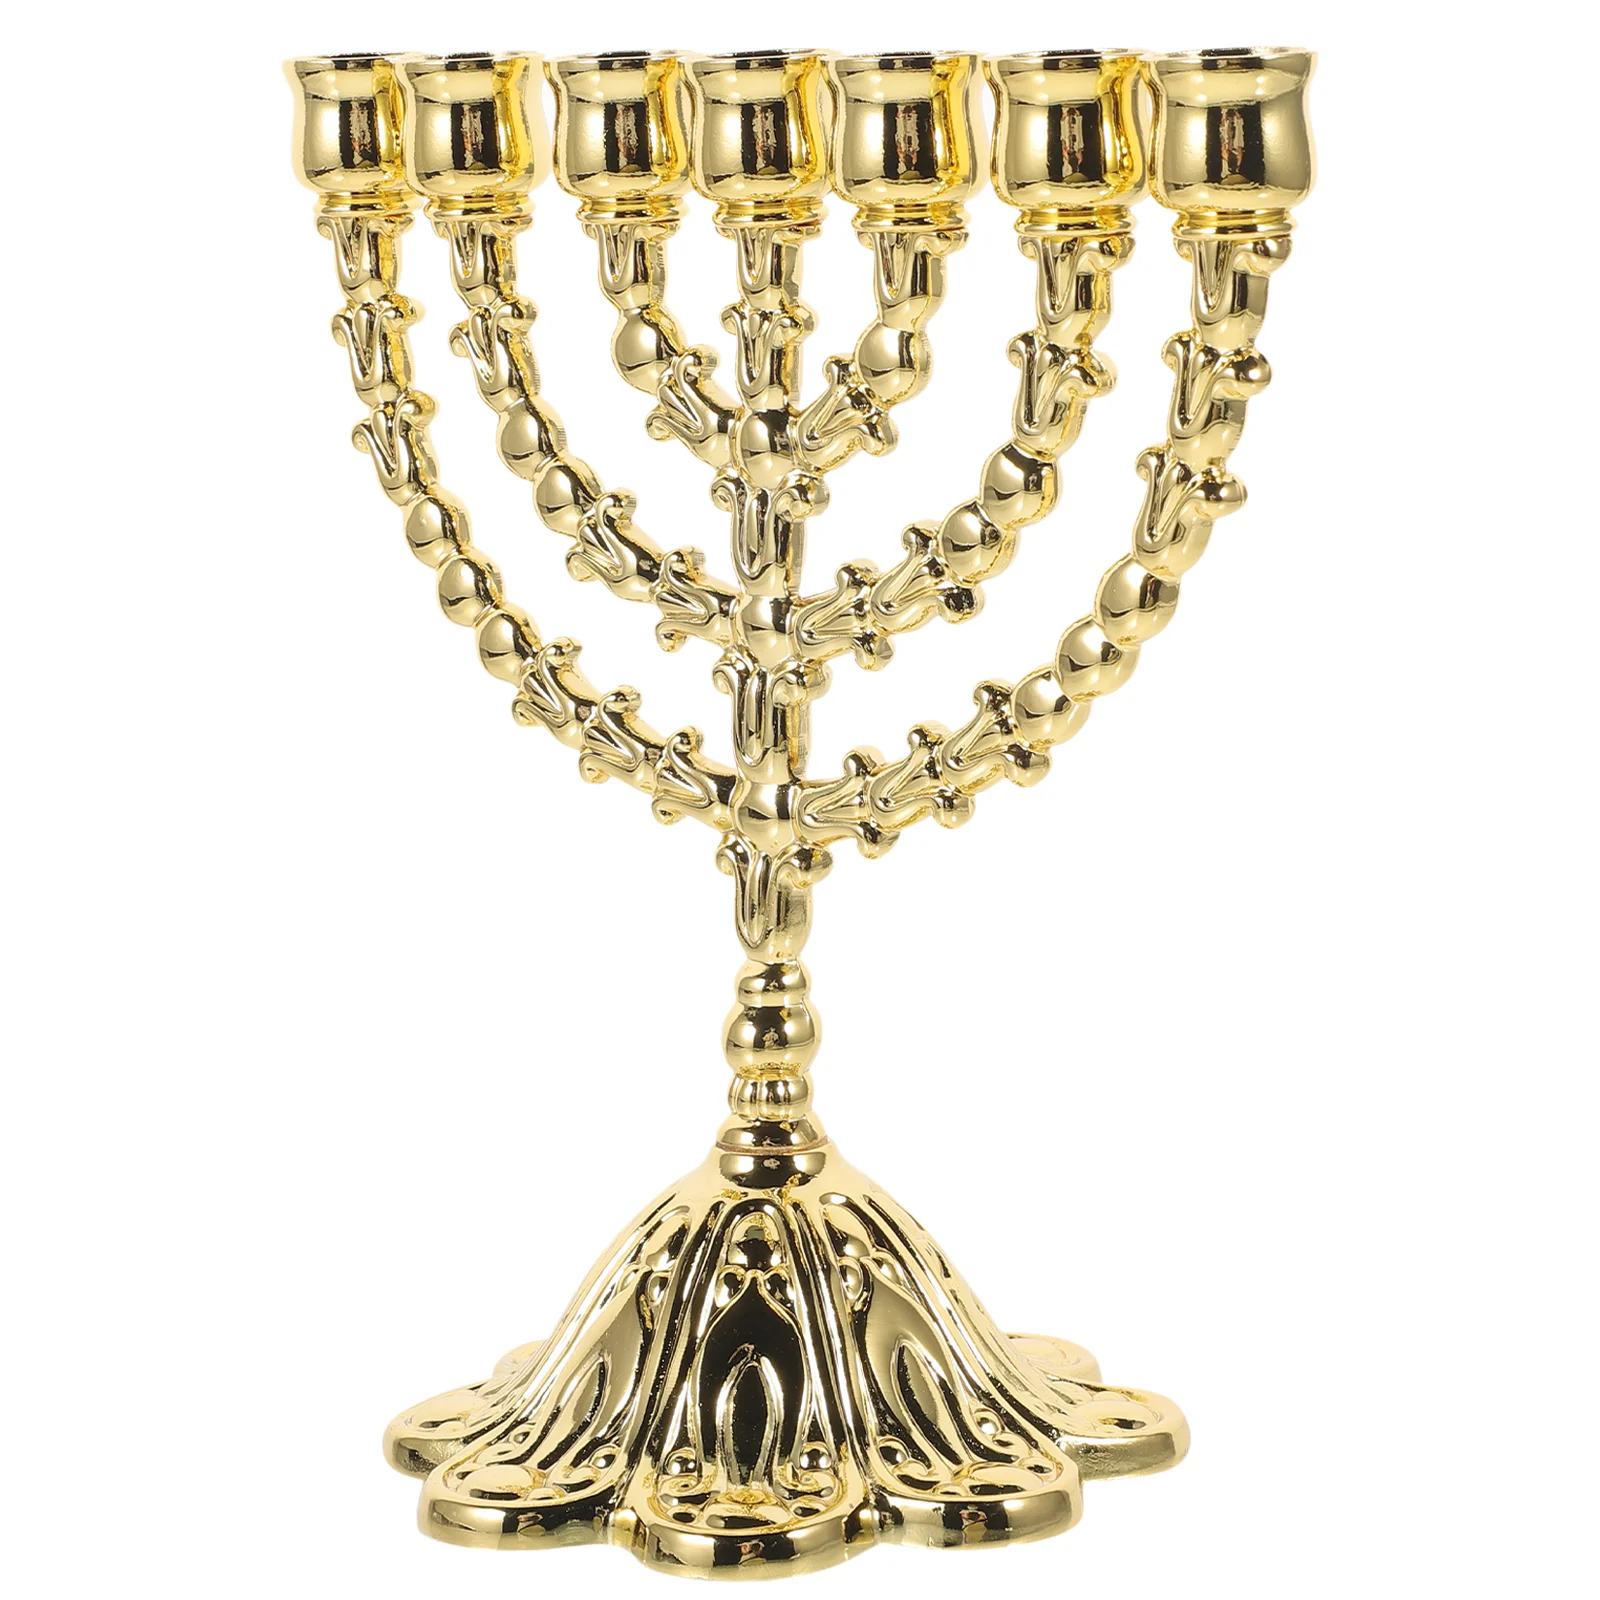 

Holder Menorah Branch Stand Metal Chanukah Hanukkah Jewish Candelabra Candlestick Vintage Table Religious Gold Jerusalem Decor